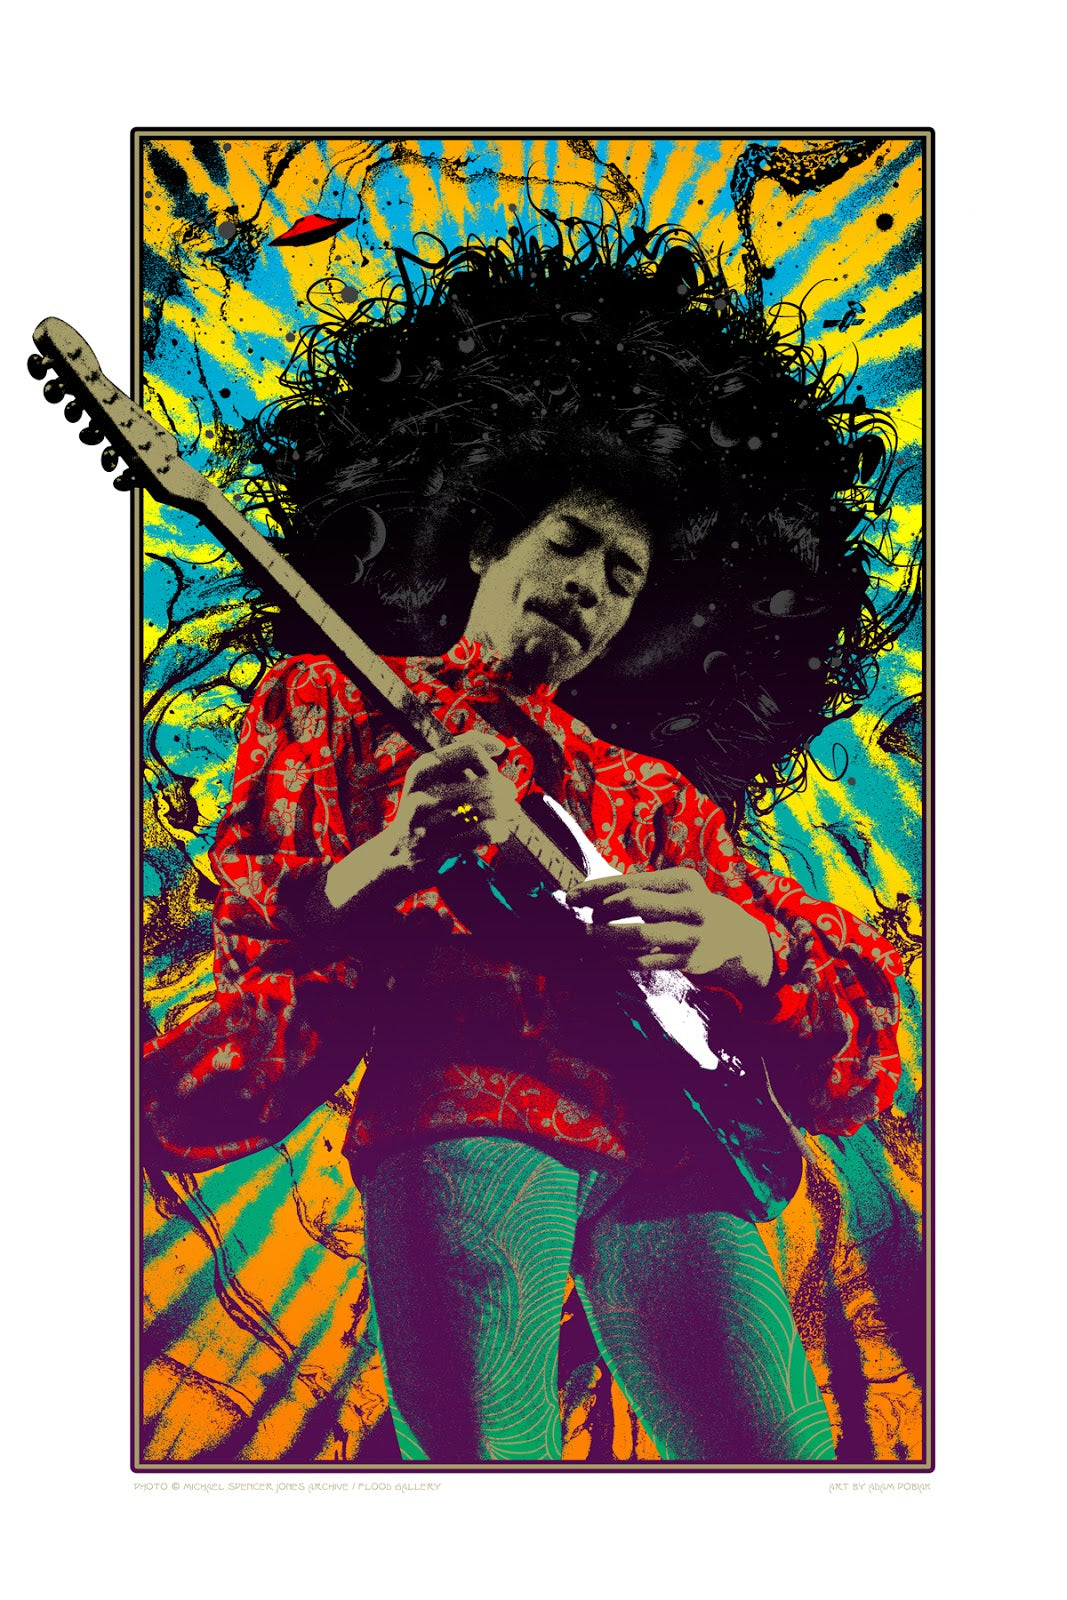 Jimi Hendrix - AP